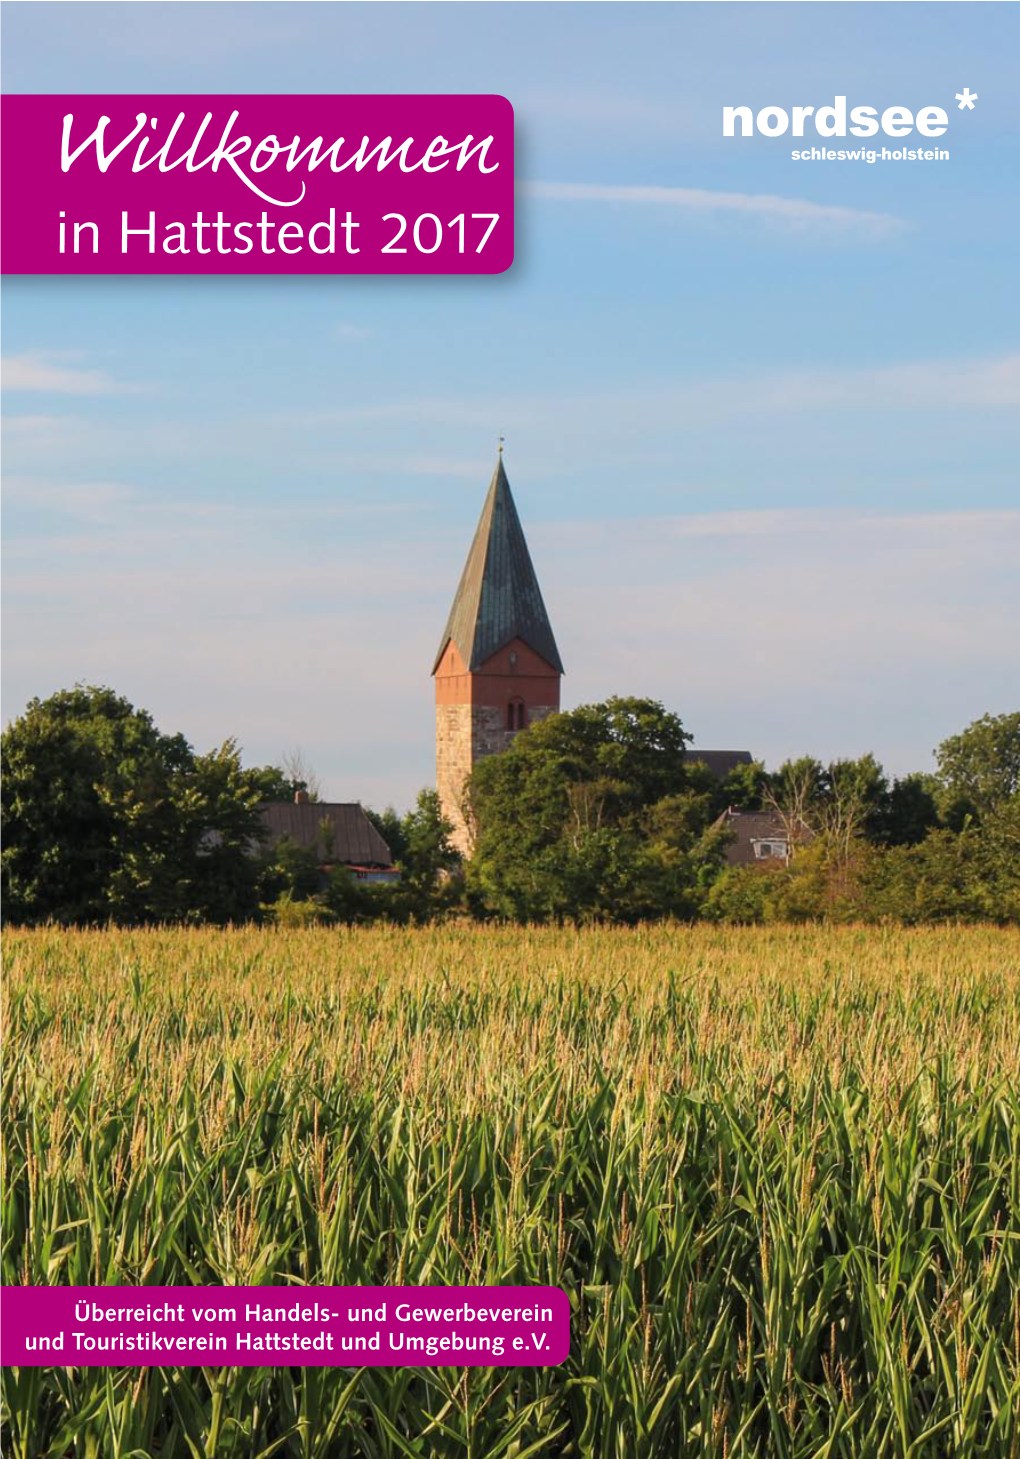 In Hattstedt 2017